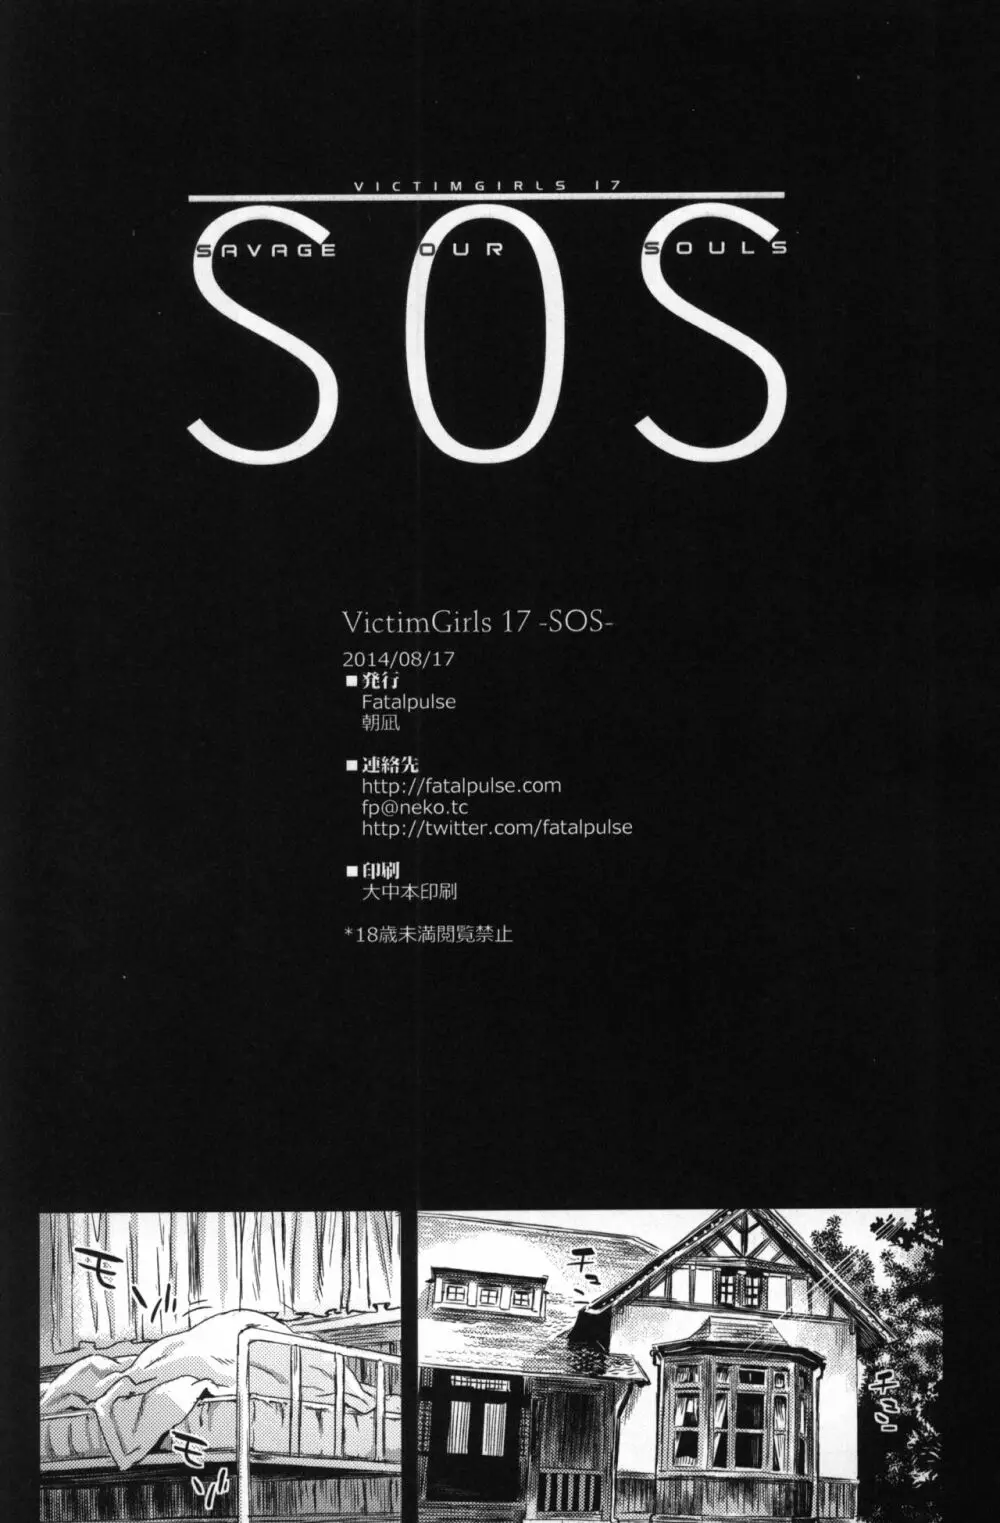 VictimGirls 17 SOS -savage our souls- 33ページ